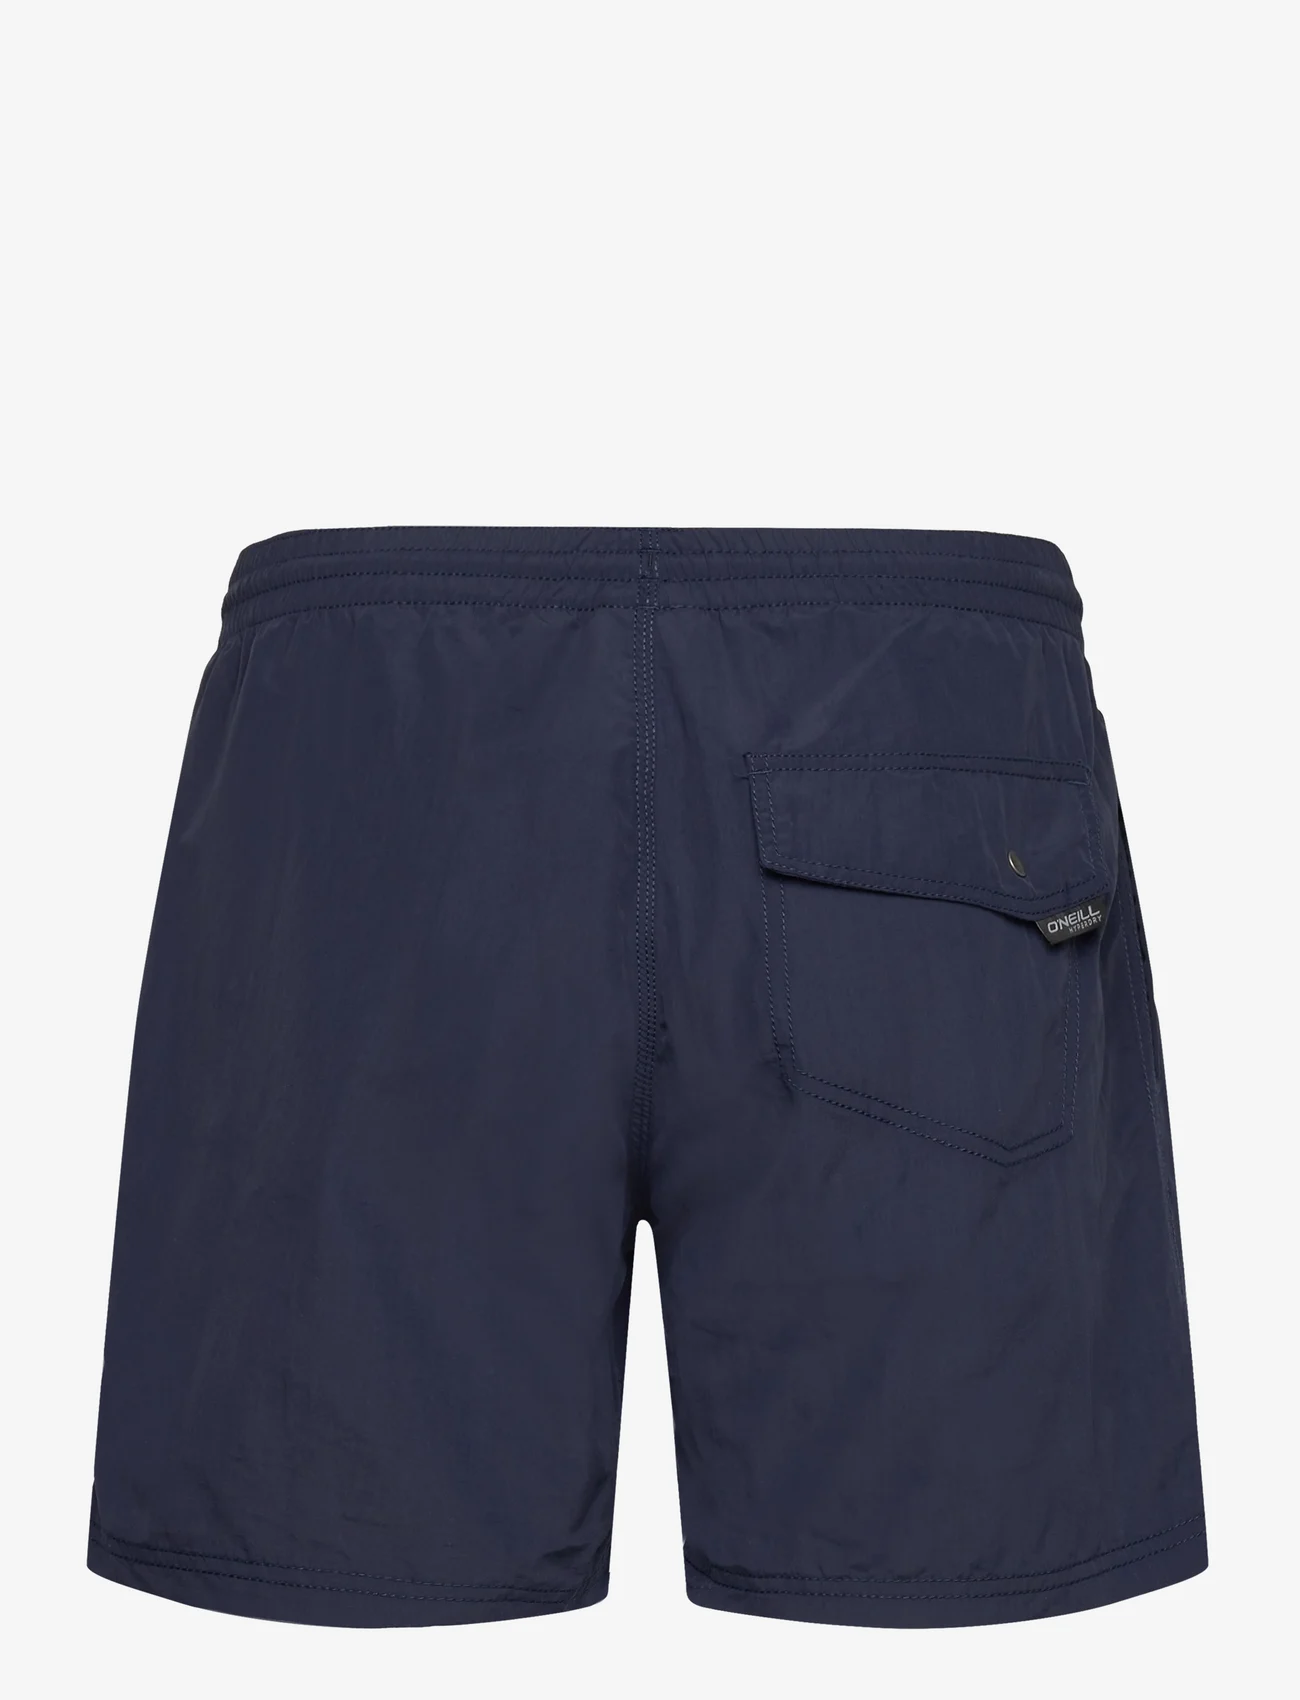 O'neill - VERT 16'' SWIM SHORTS - board shorts - ink blue - 1